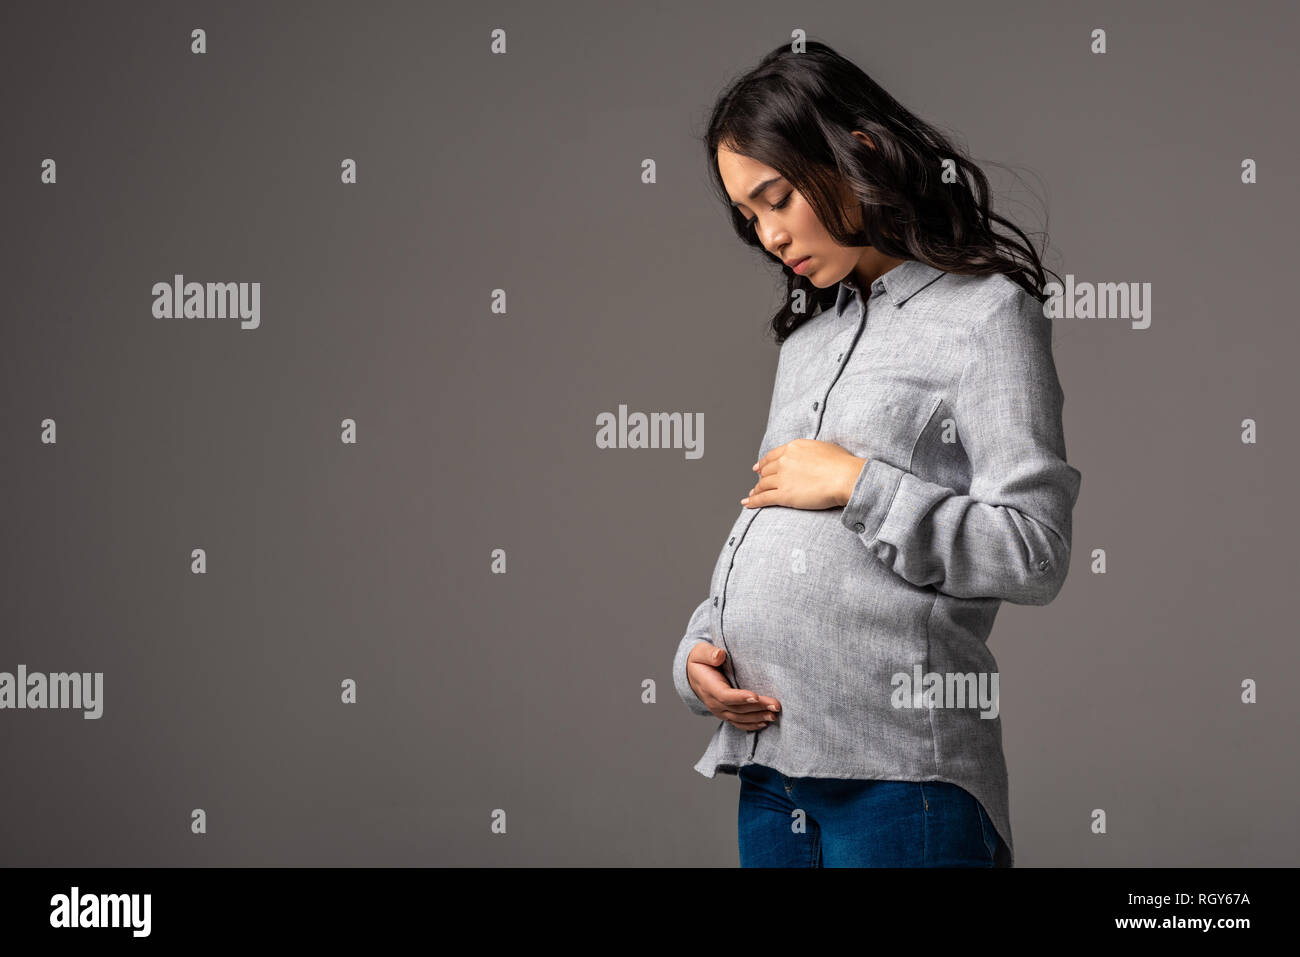 Sexy Pregnant Asian Women